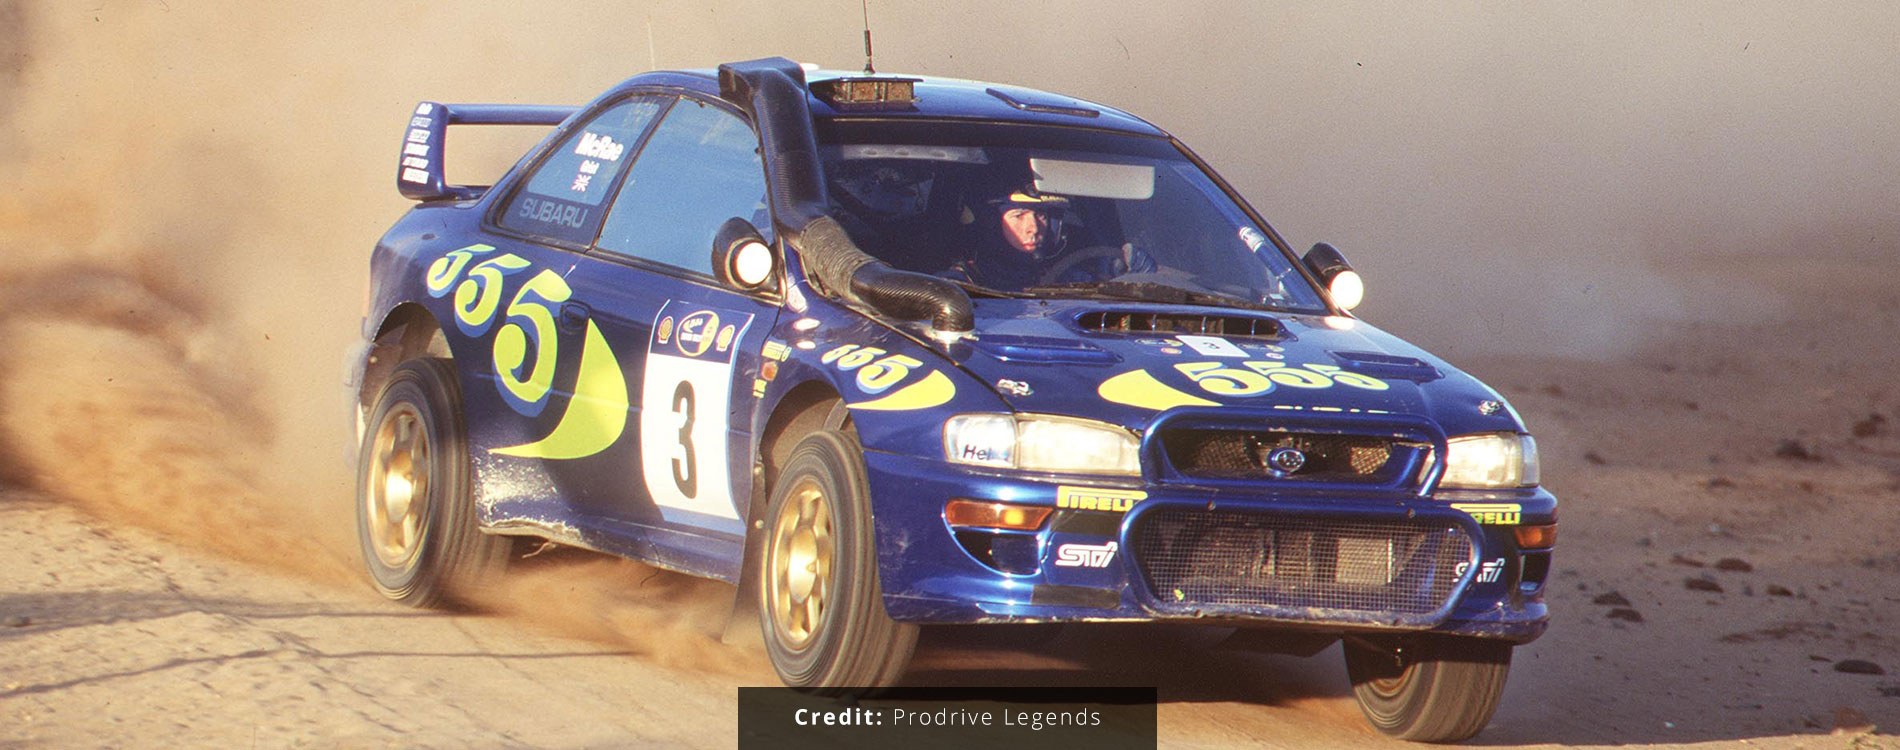 Emerging classic and rally hero Subaru Impreza